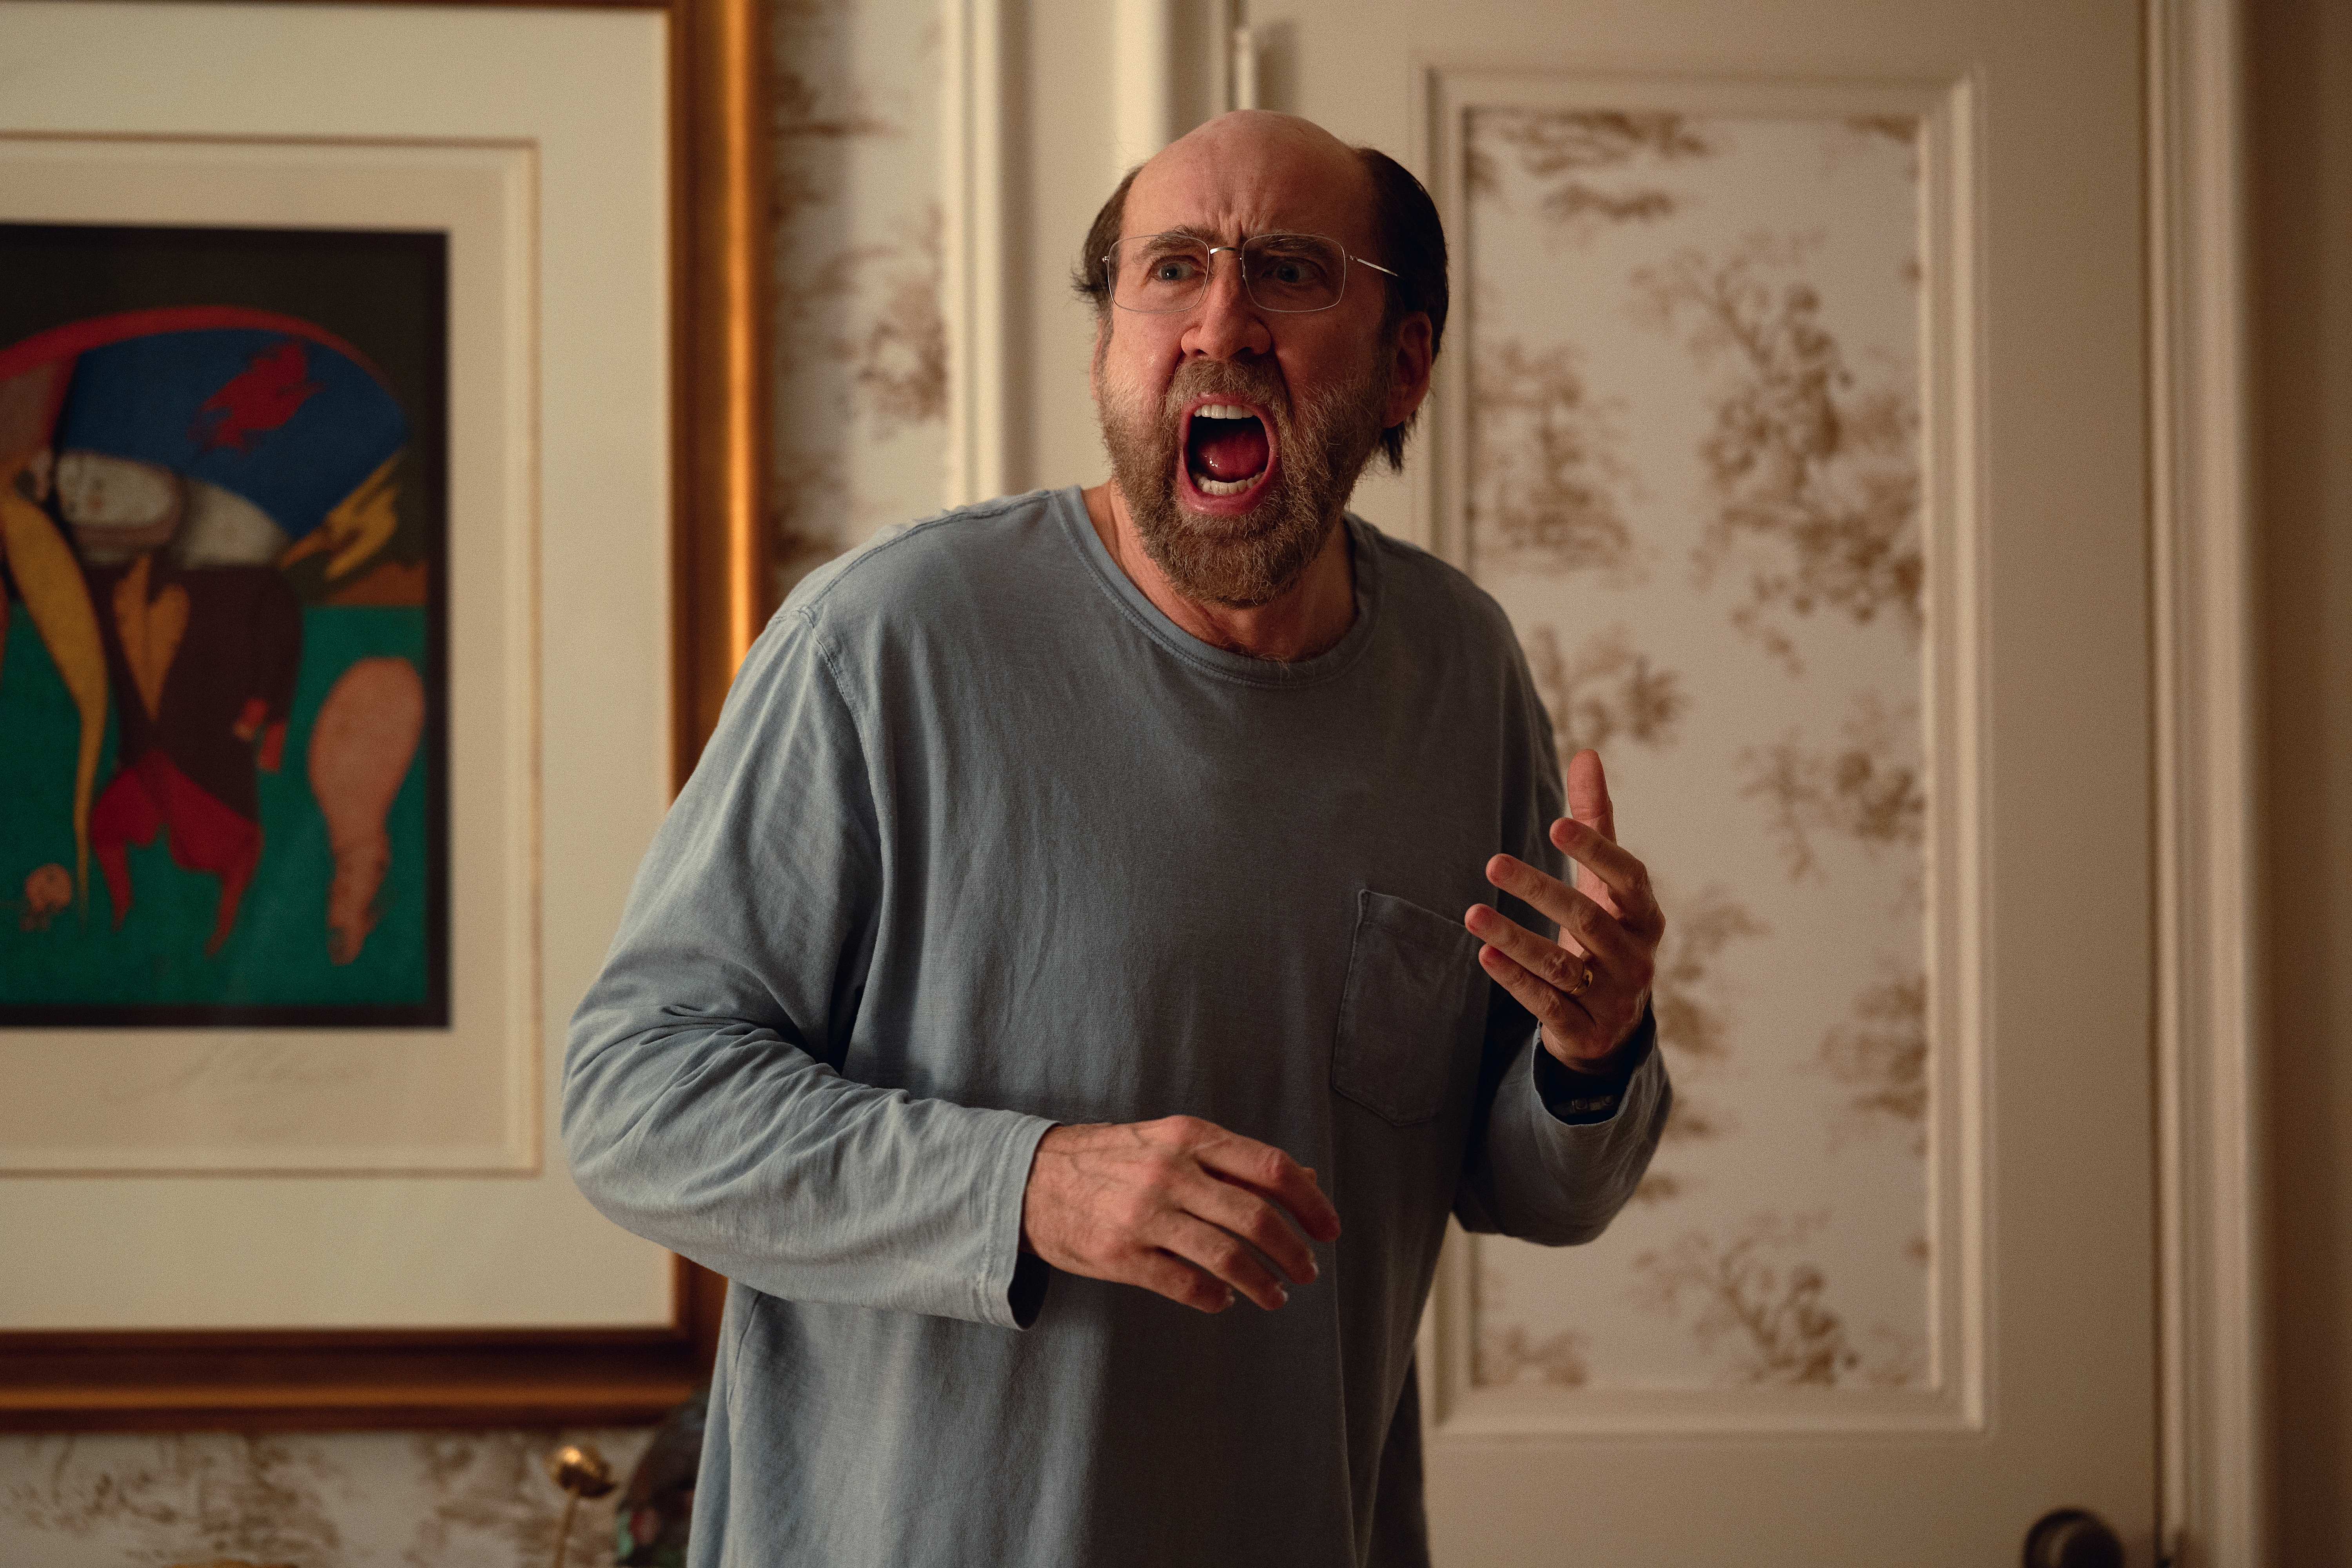 Balding, middle-aged professor Paul Matthews (Nicolas Cage) stands in his living room screaming in A24’s Dream Scenario